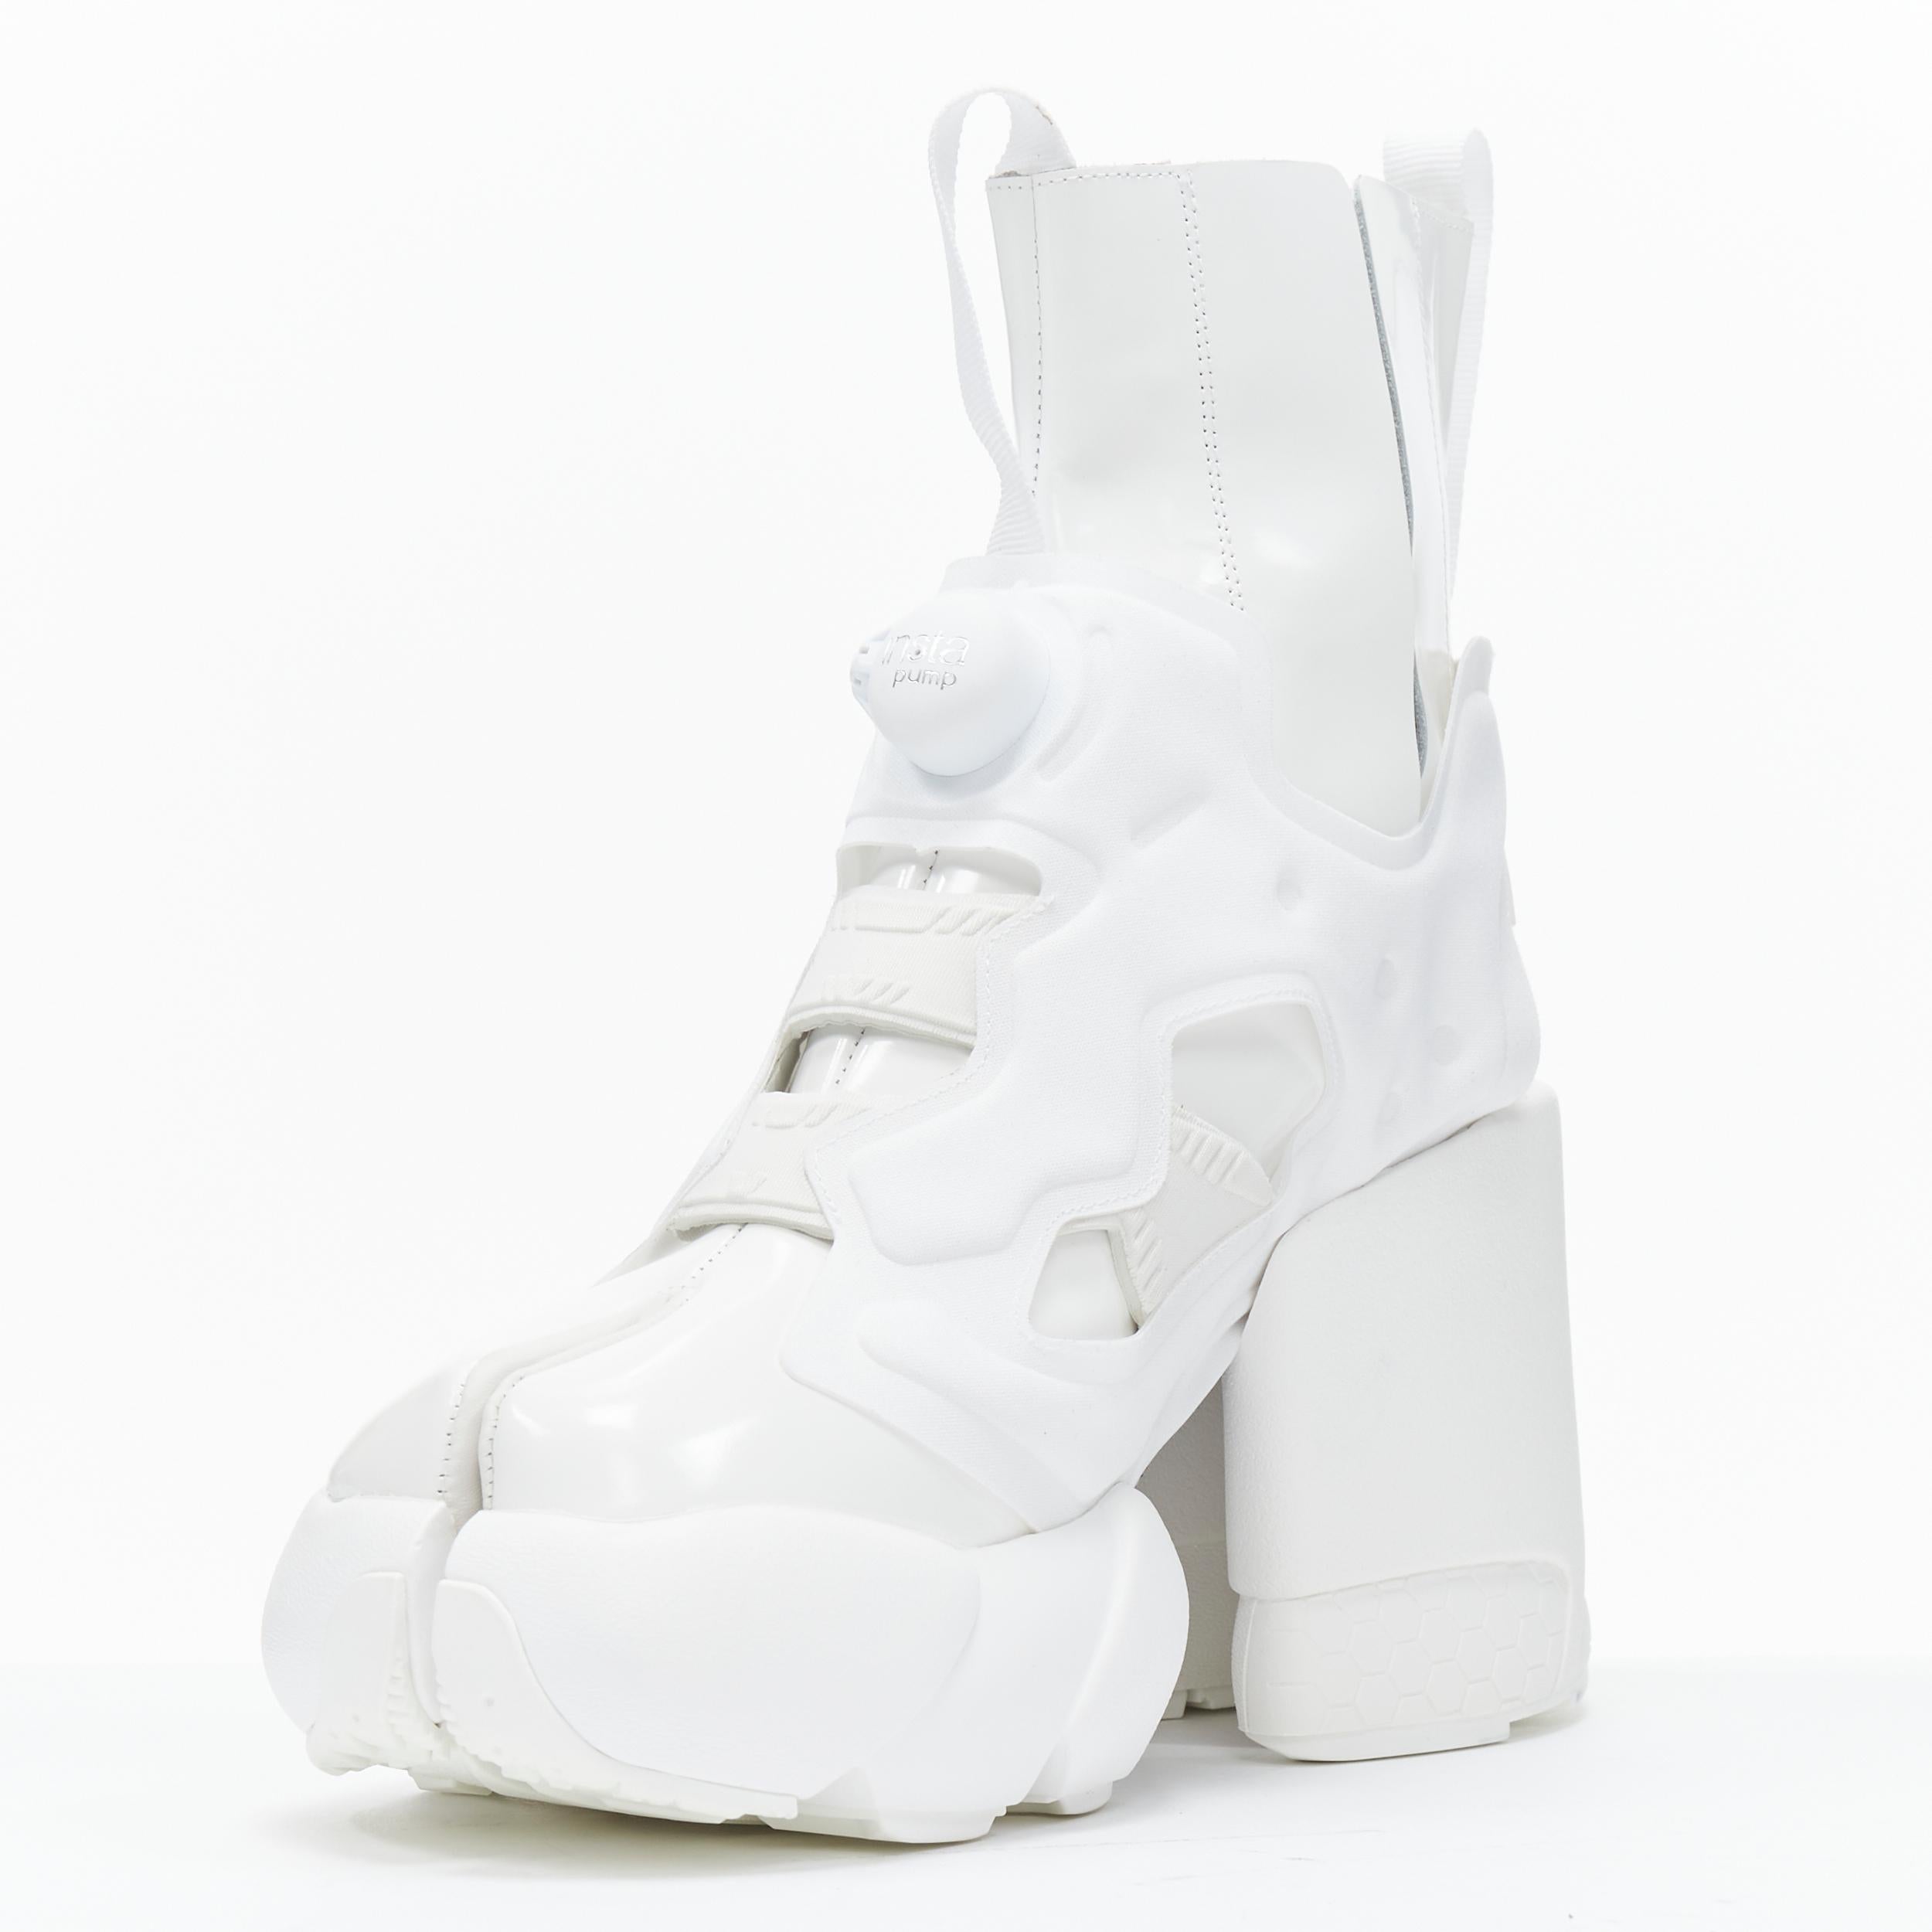 Gray new MAISON MARGIELA REEBOK 2020 Runway Tabi Instapump white sneaker boot EU37